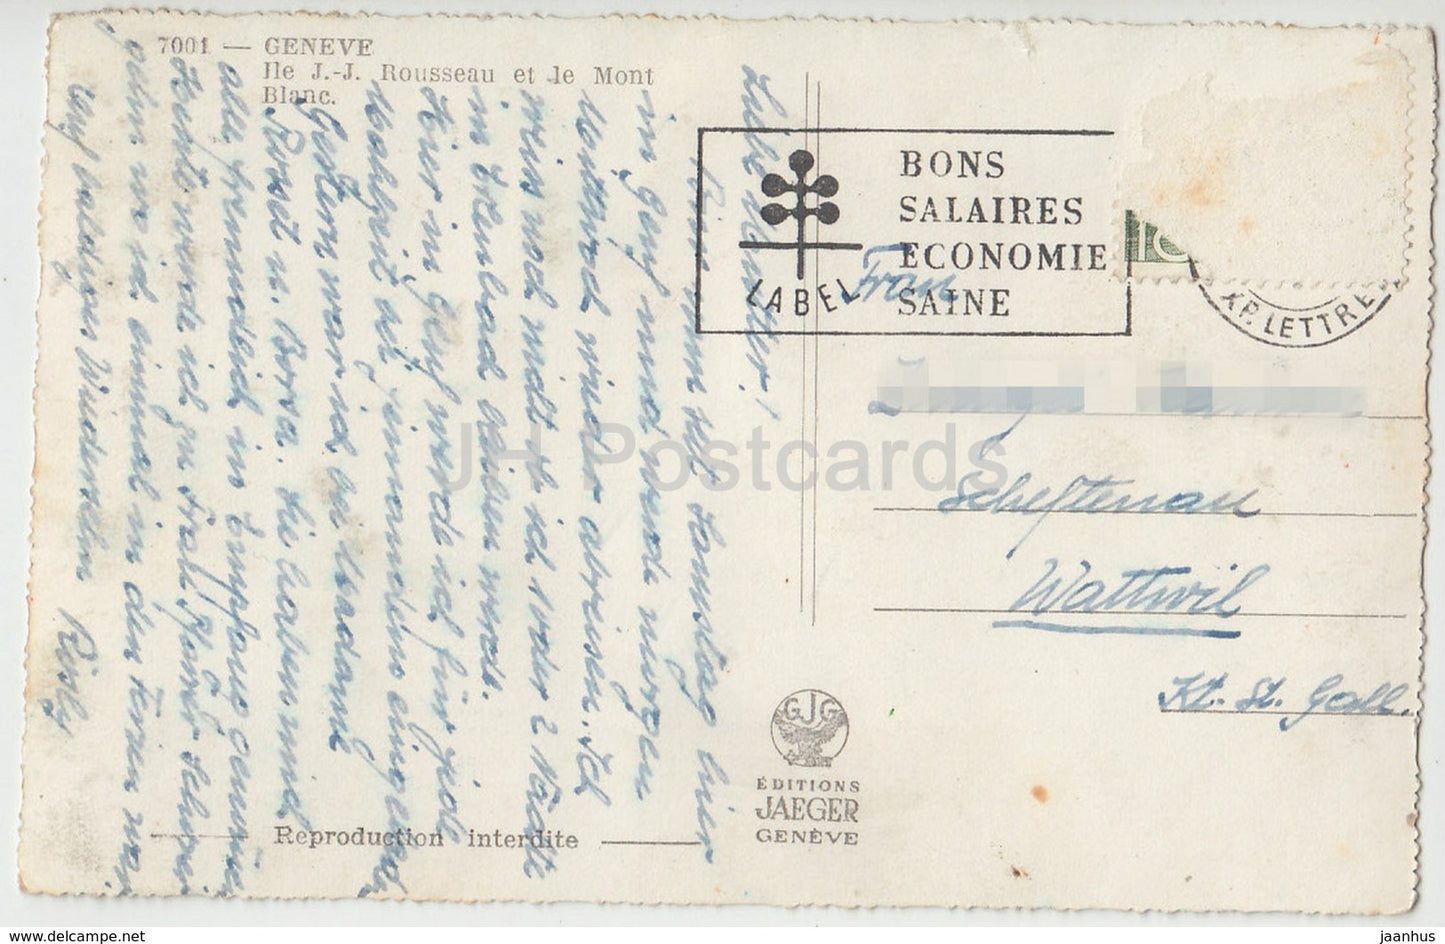 Genf - Genf - Ile J.-J. Rousseau et le Mont Blanc – 7001 – Schweiz – alte Postkarte – gebraucht